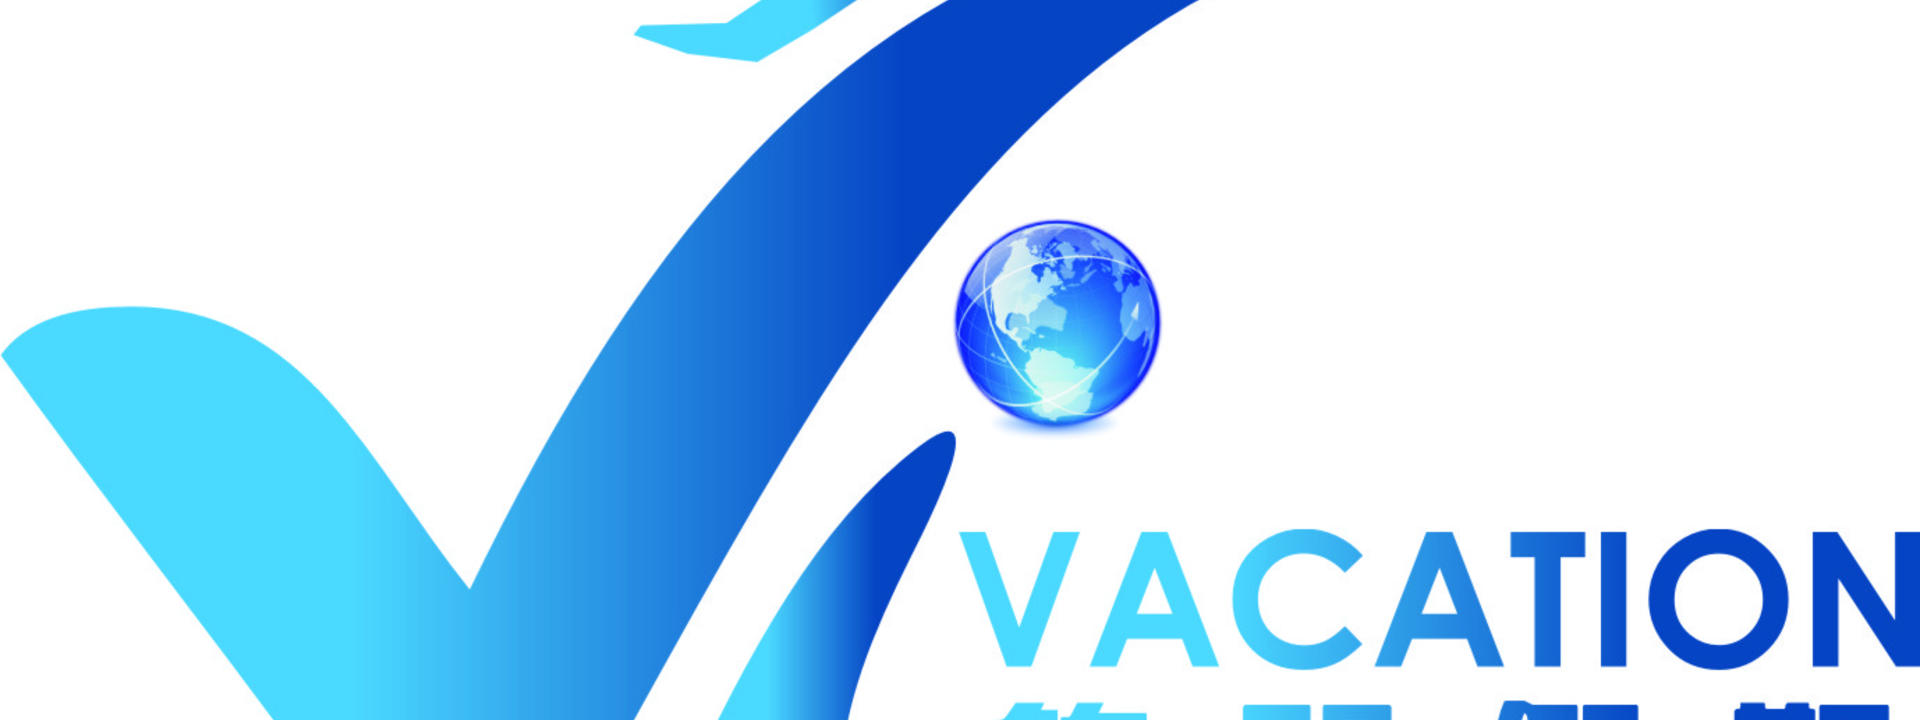 Logo: VI VACATION & TRAVEL SERVICES SDN BHD